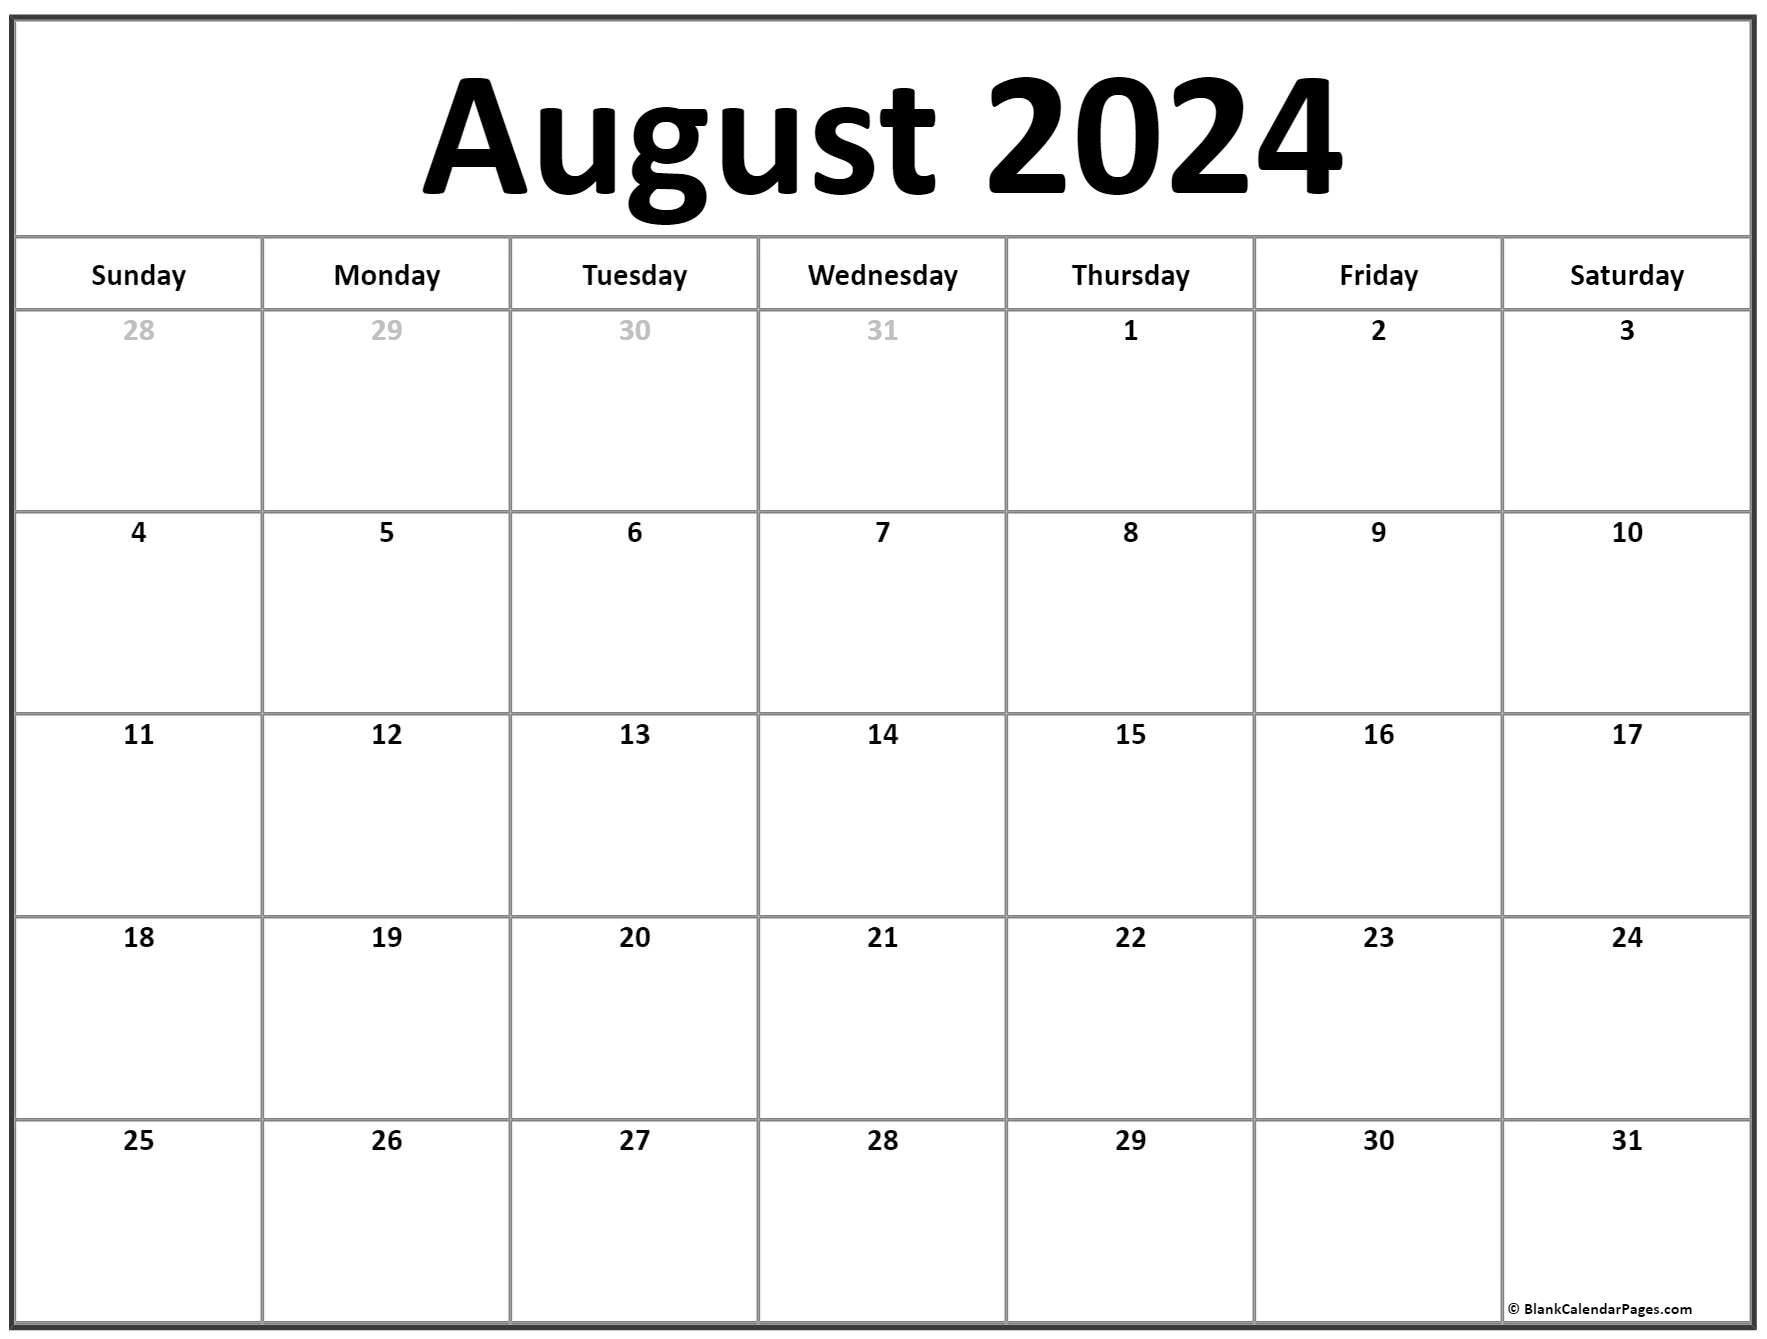 August 2024 calendar free printable calendar